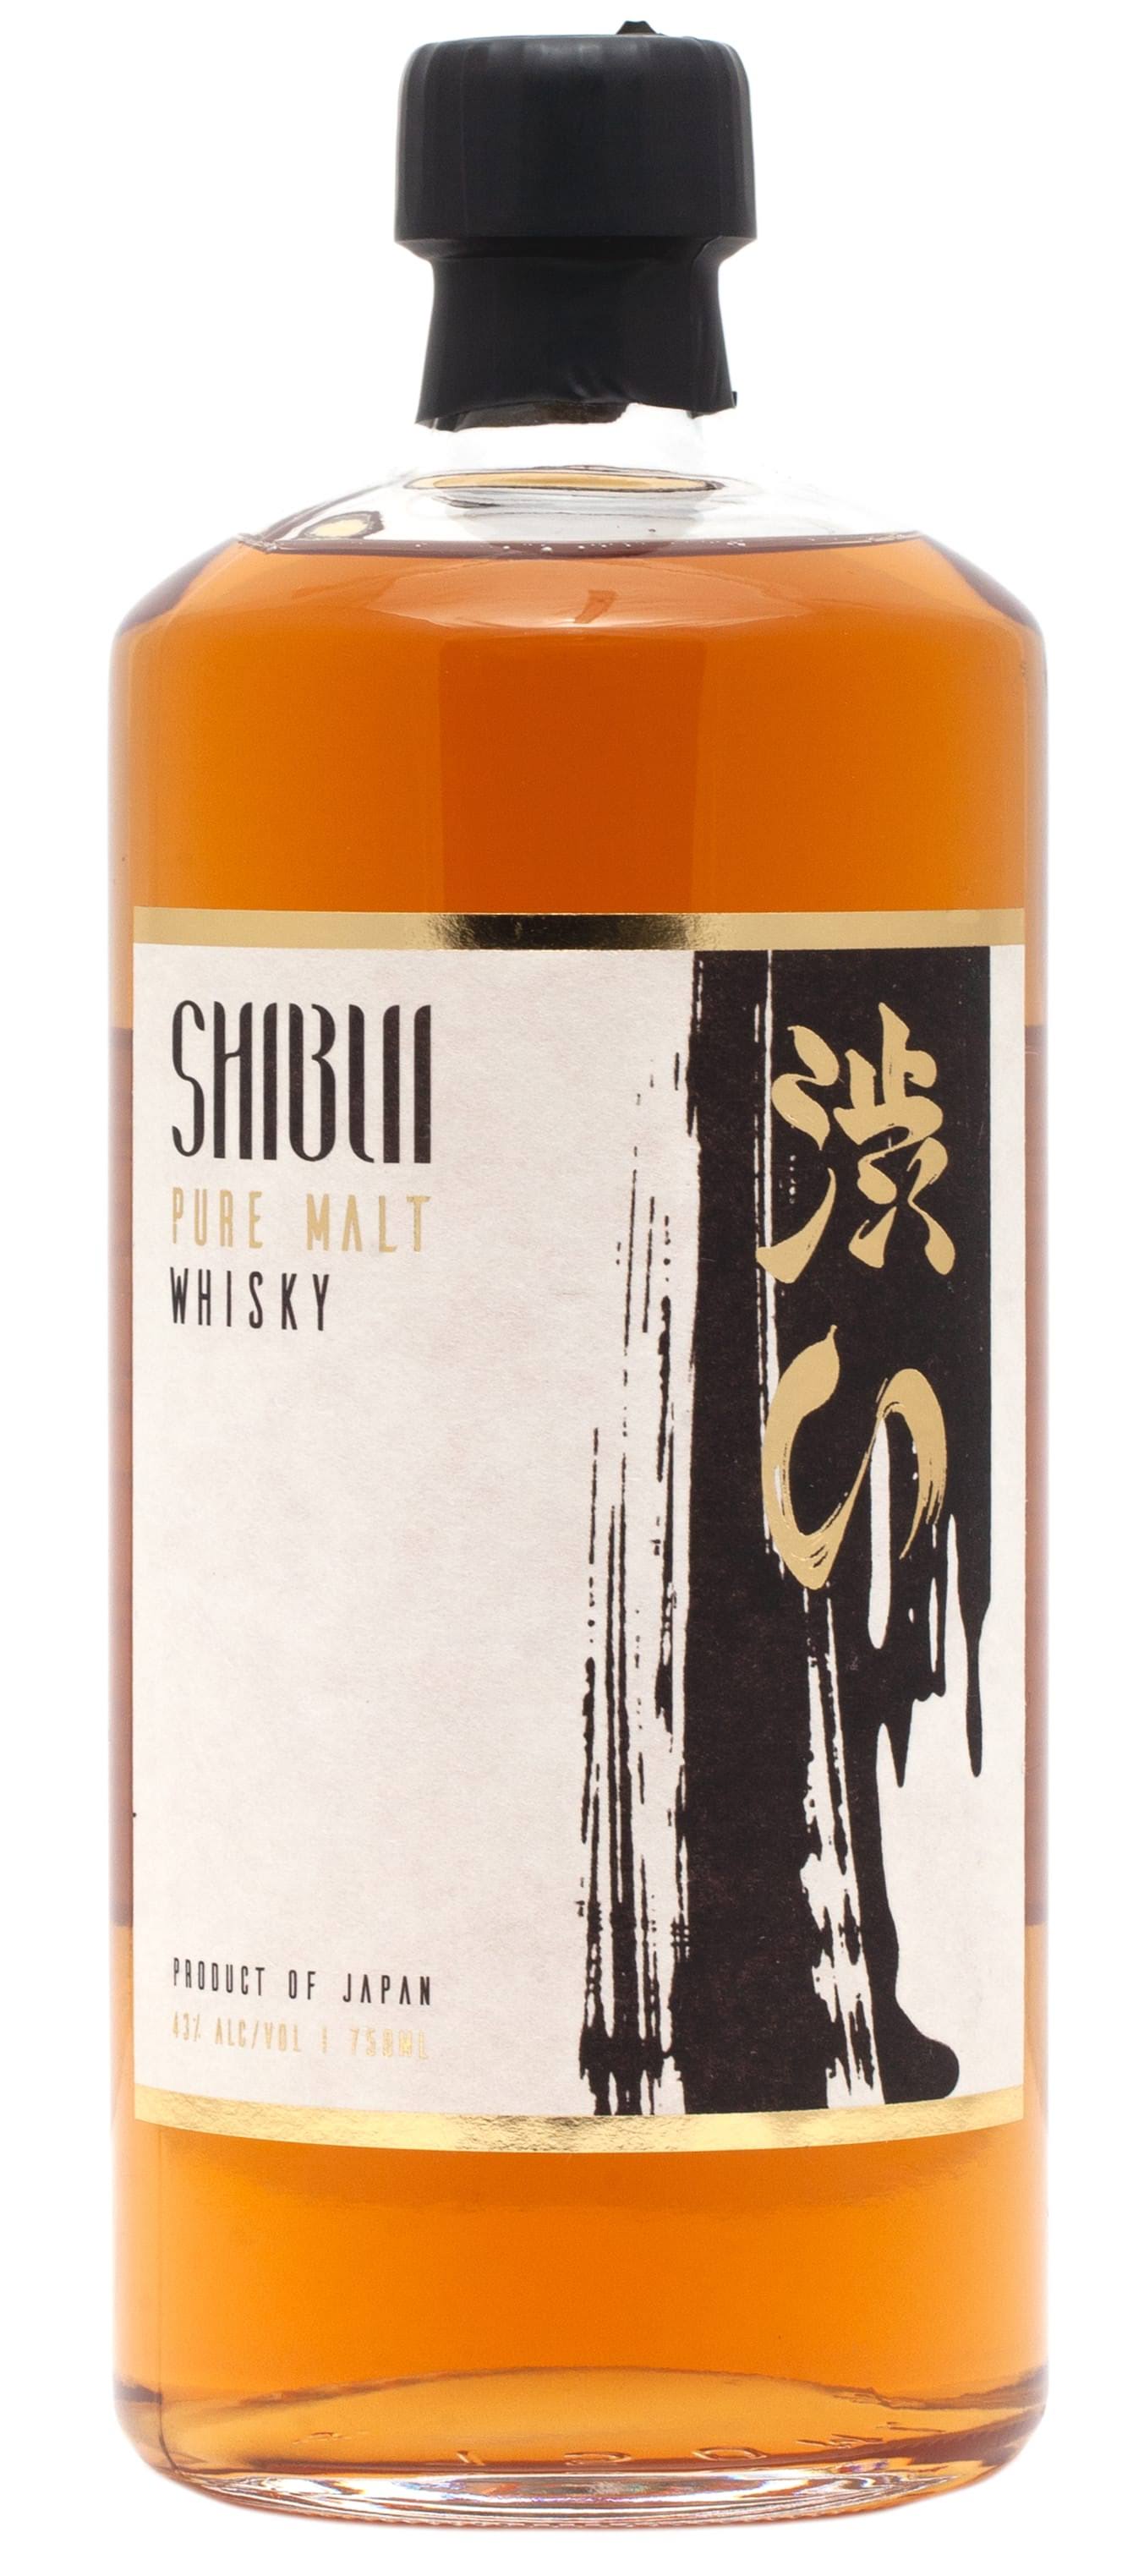 Shibui Pure Malt Whisky 750ml Bottle